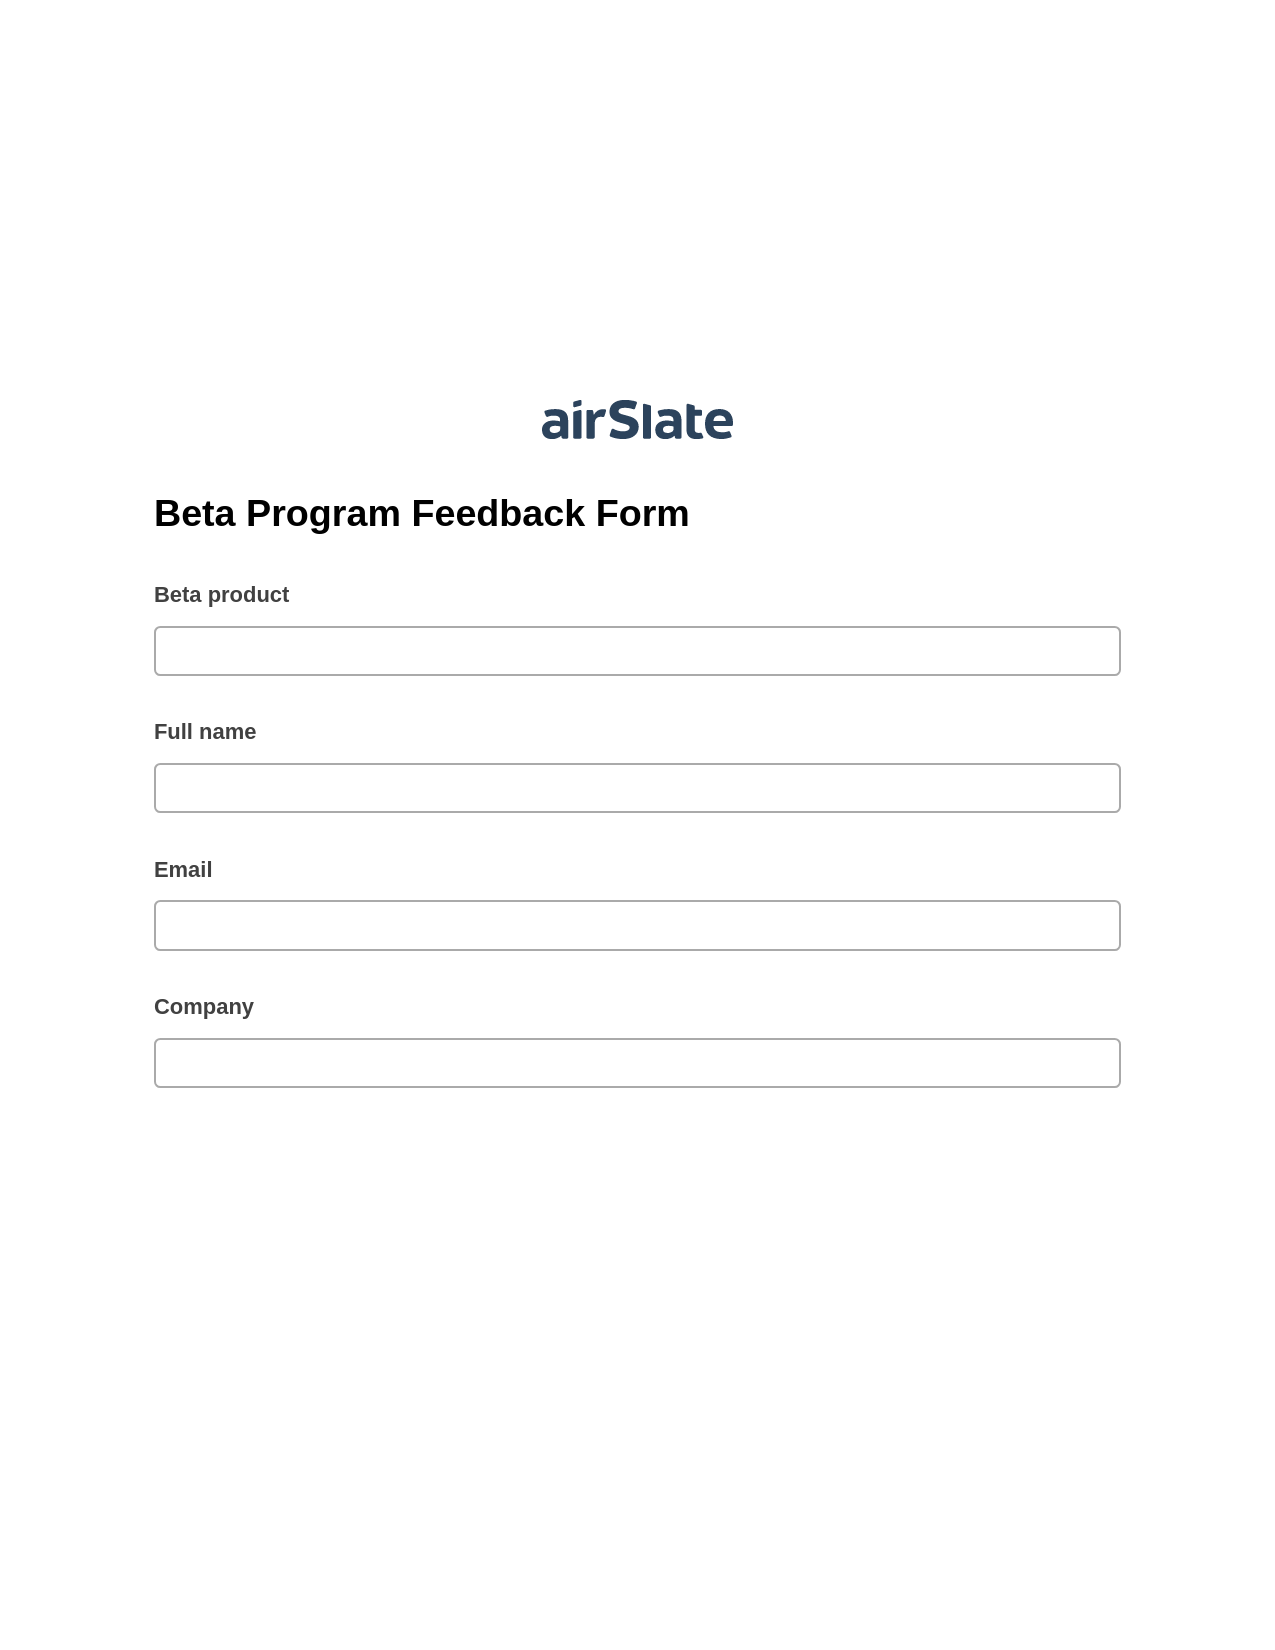 Multirole Beta Program Feedback Form Pre-fill from NetSuite Records Bot, Remove Slate Bot, Post-finish Document Bot